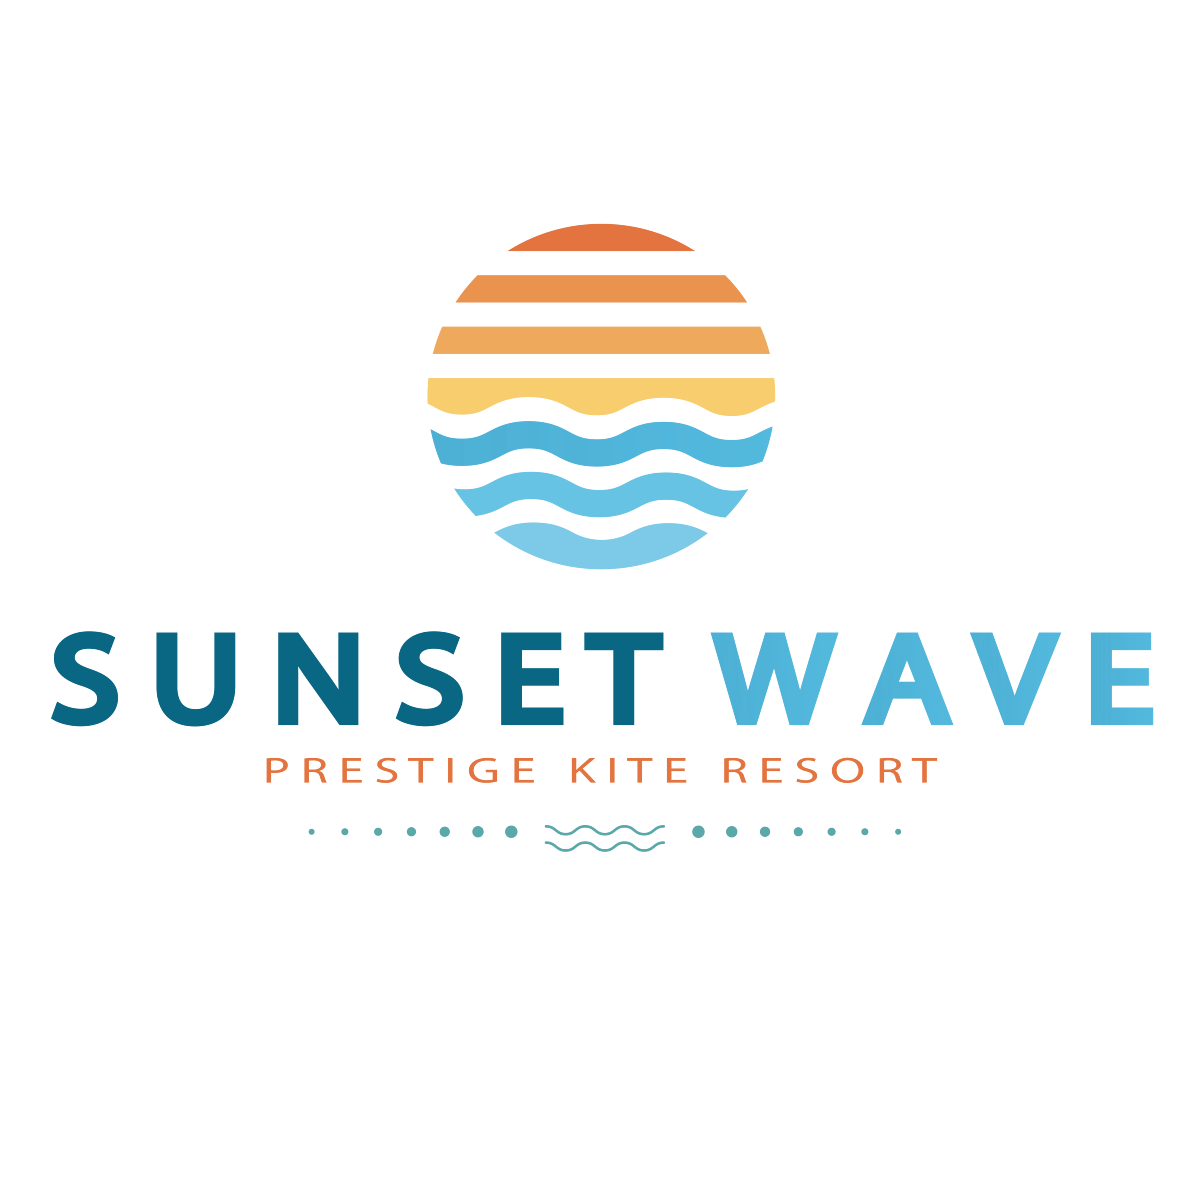 Sunset Wave - Prestige Kite Resort